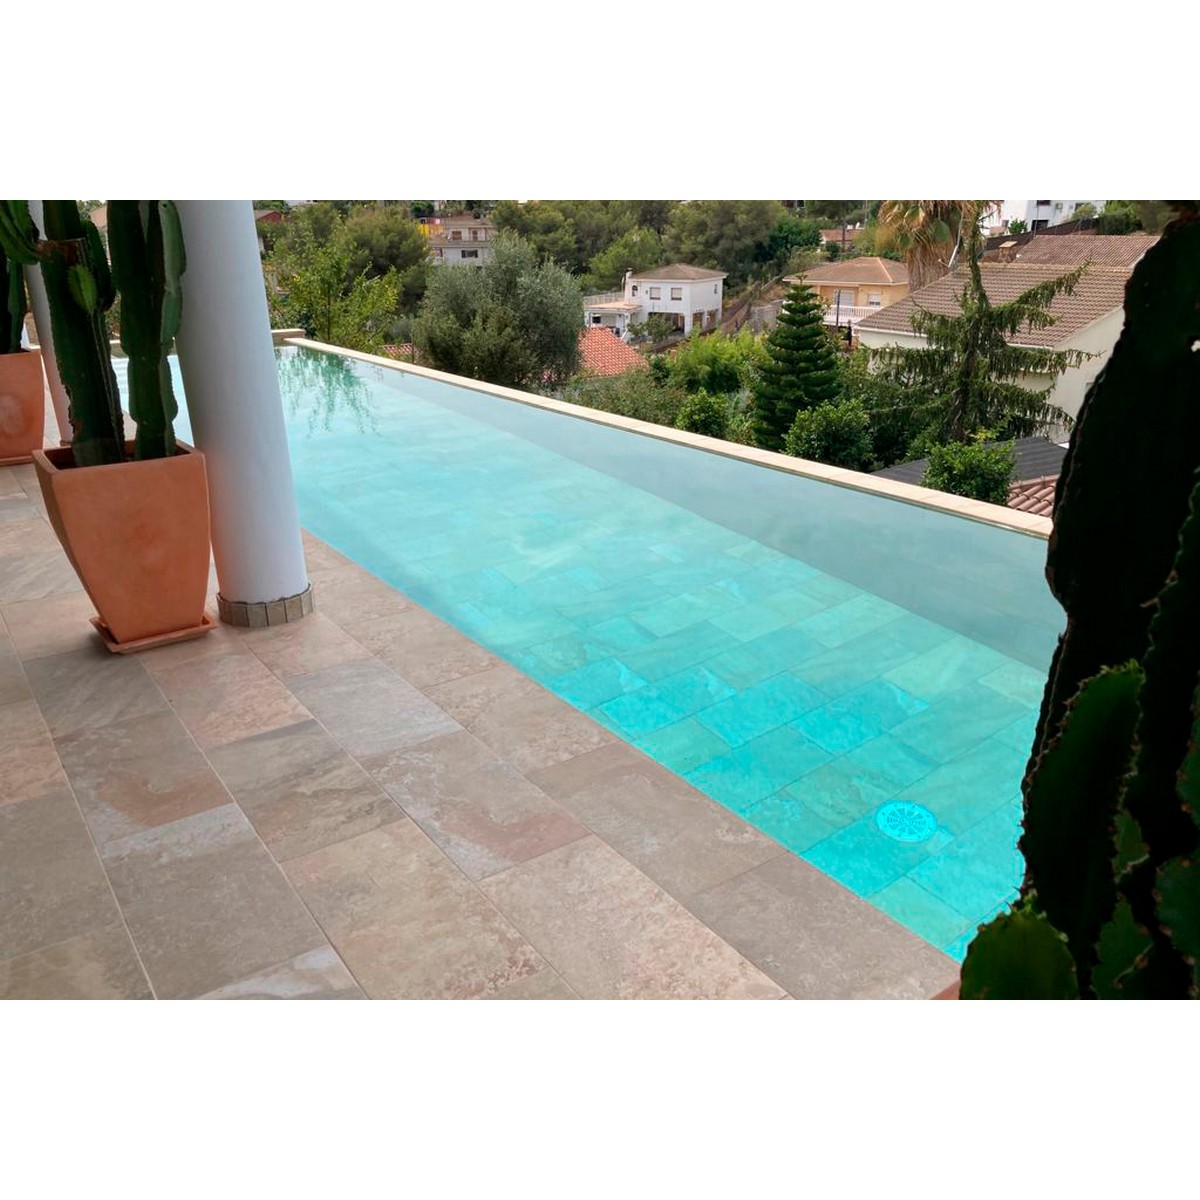 Foto de ambiente Pietro Golden - Exterior e interior de piscina